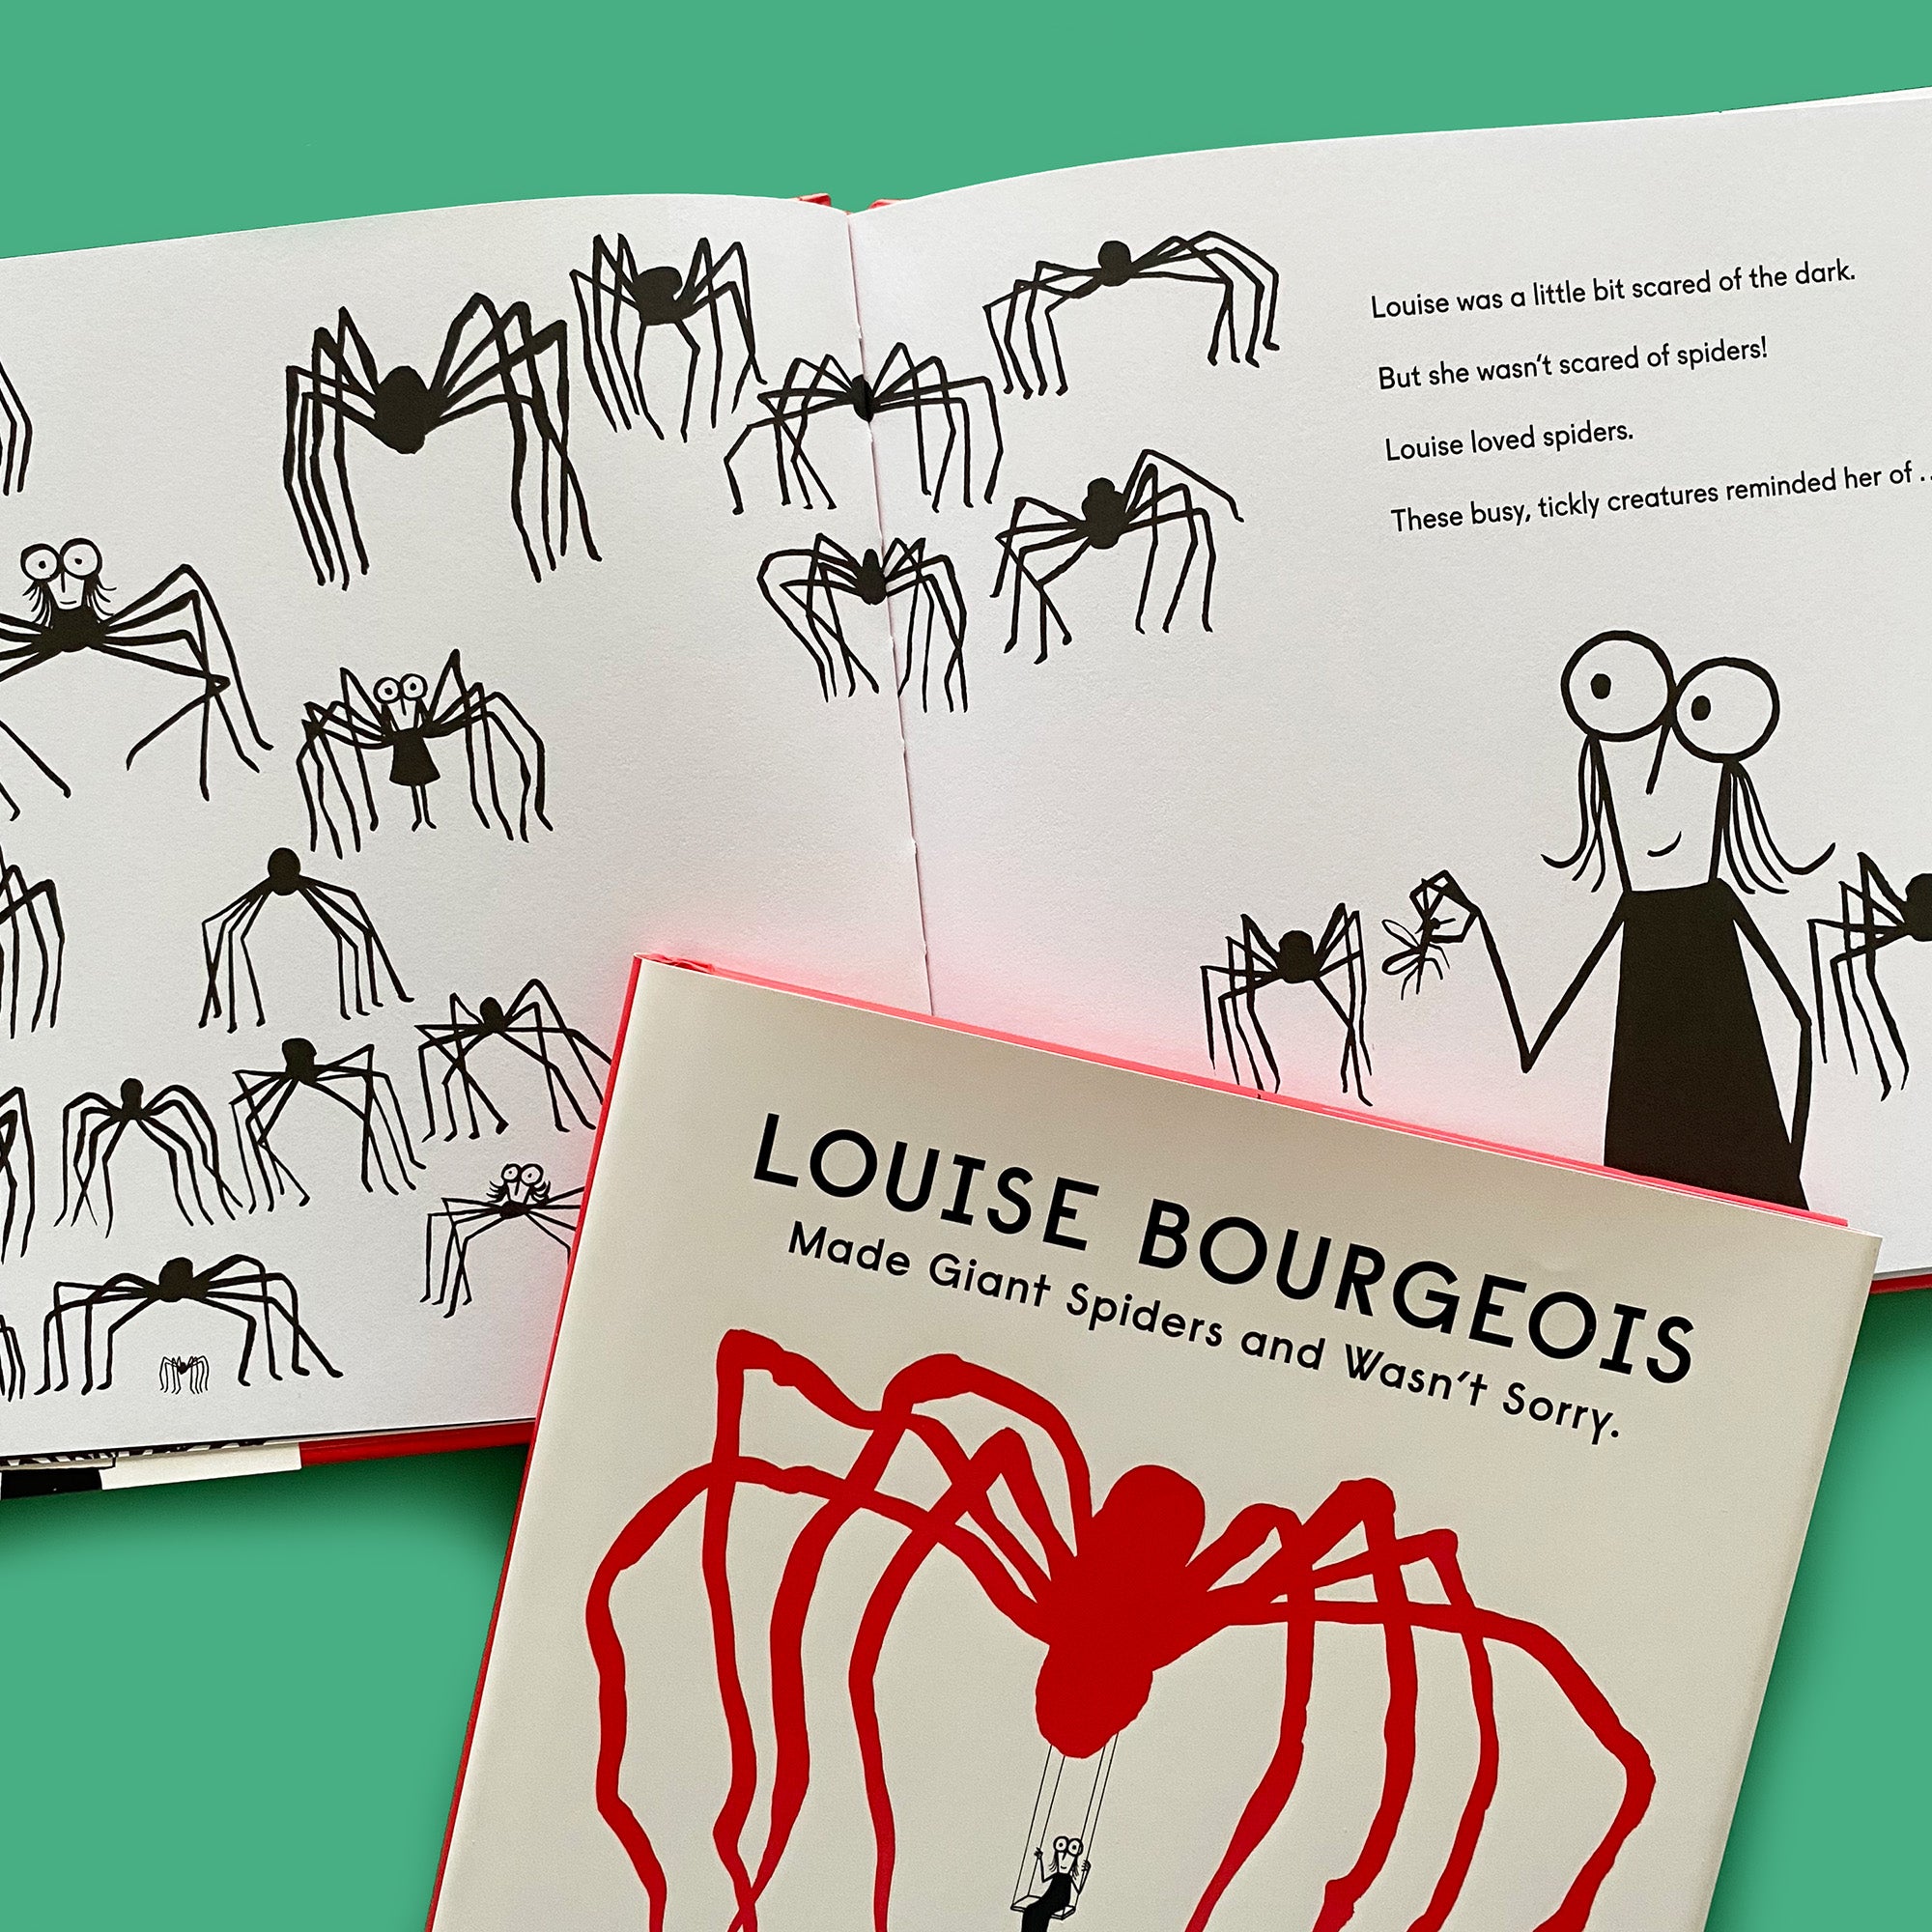 路易絲·布爾喬亞創作出巨型蜘蛛也不後悔Louise Bourgeois Made Giant Spiders and Wasn't Sorry.  兒童書籍善本圖書-Taobao